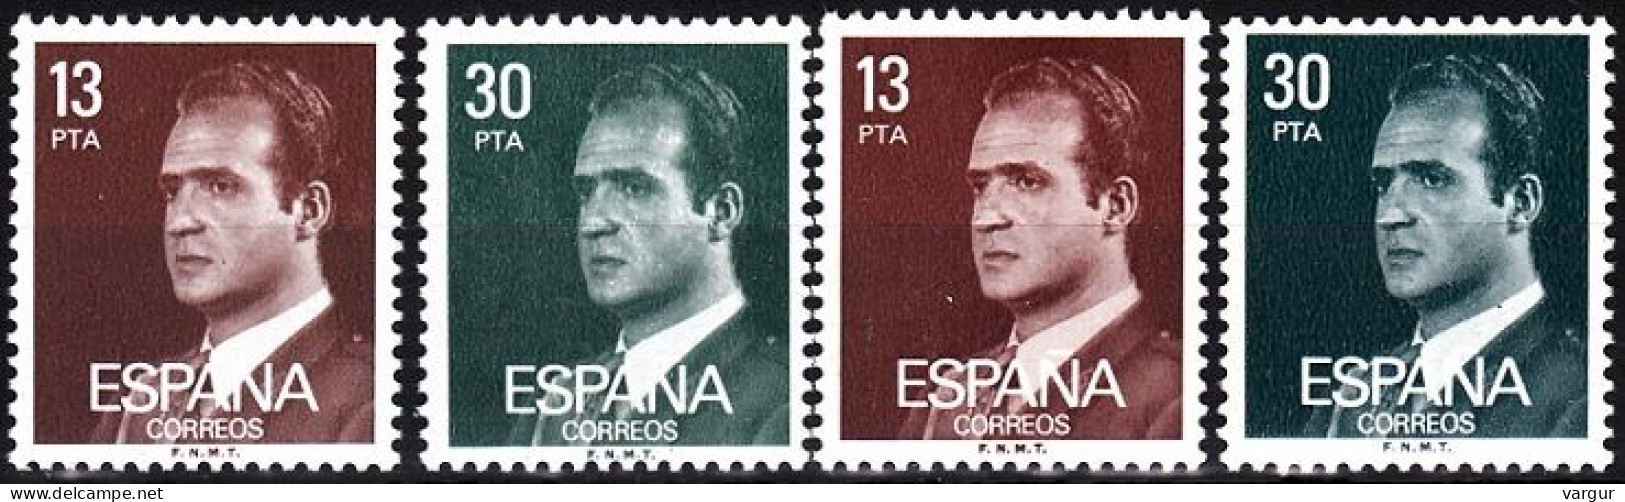 SPAIN 1981-89 Definitive: King Juan Carlos I. #5. Regular And PHOSPHOR. Complete, MNH - Royalties, Royals